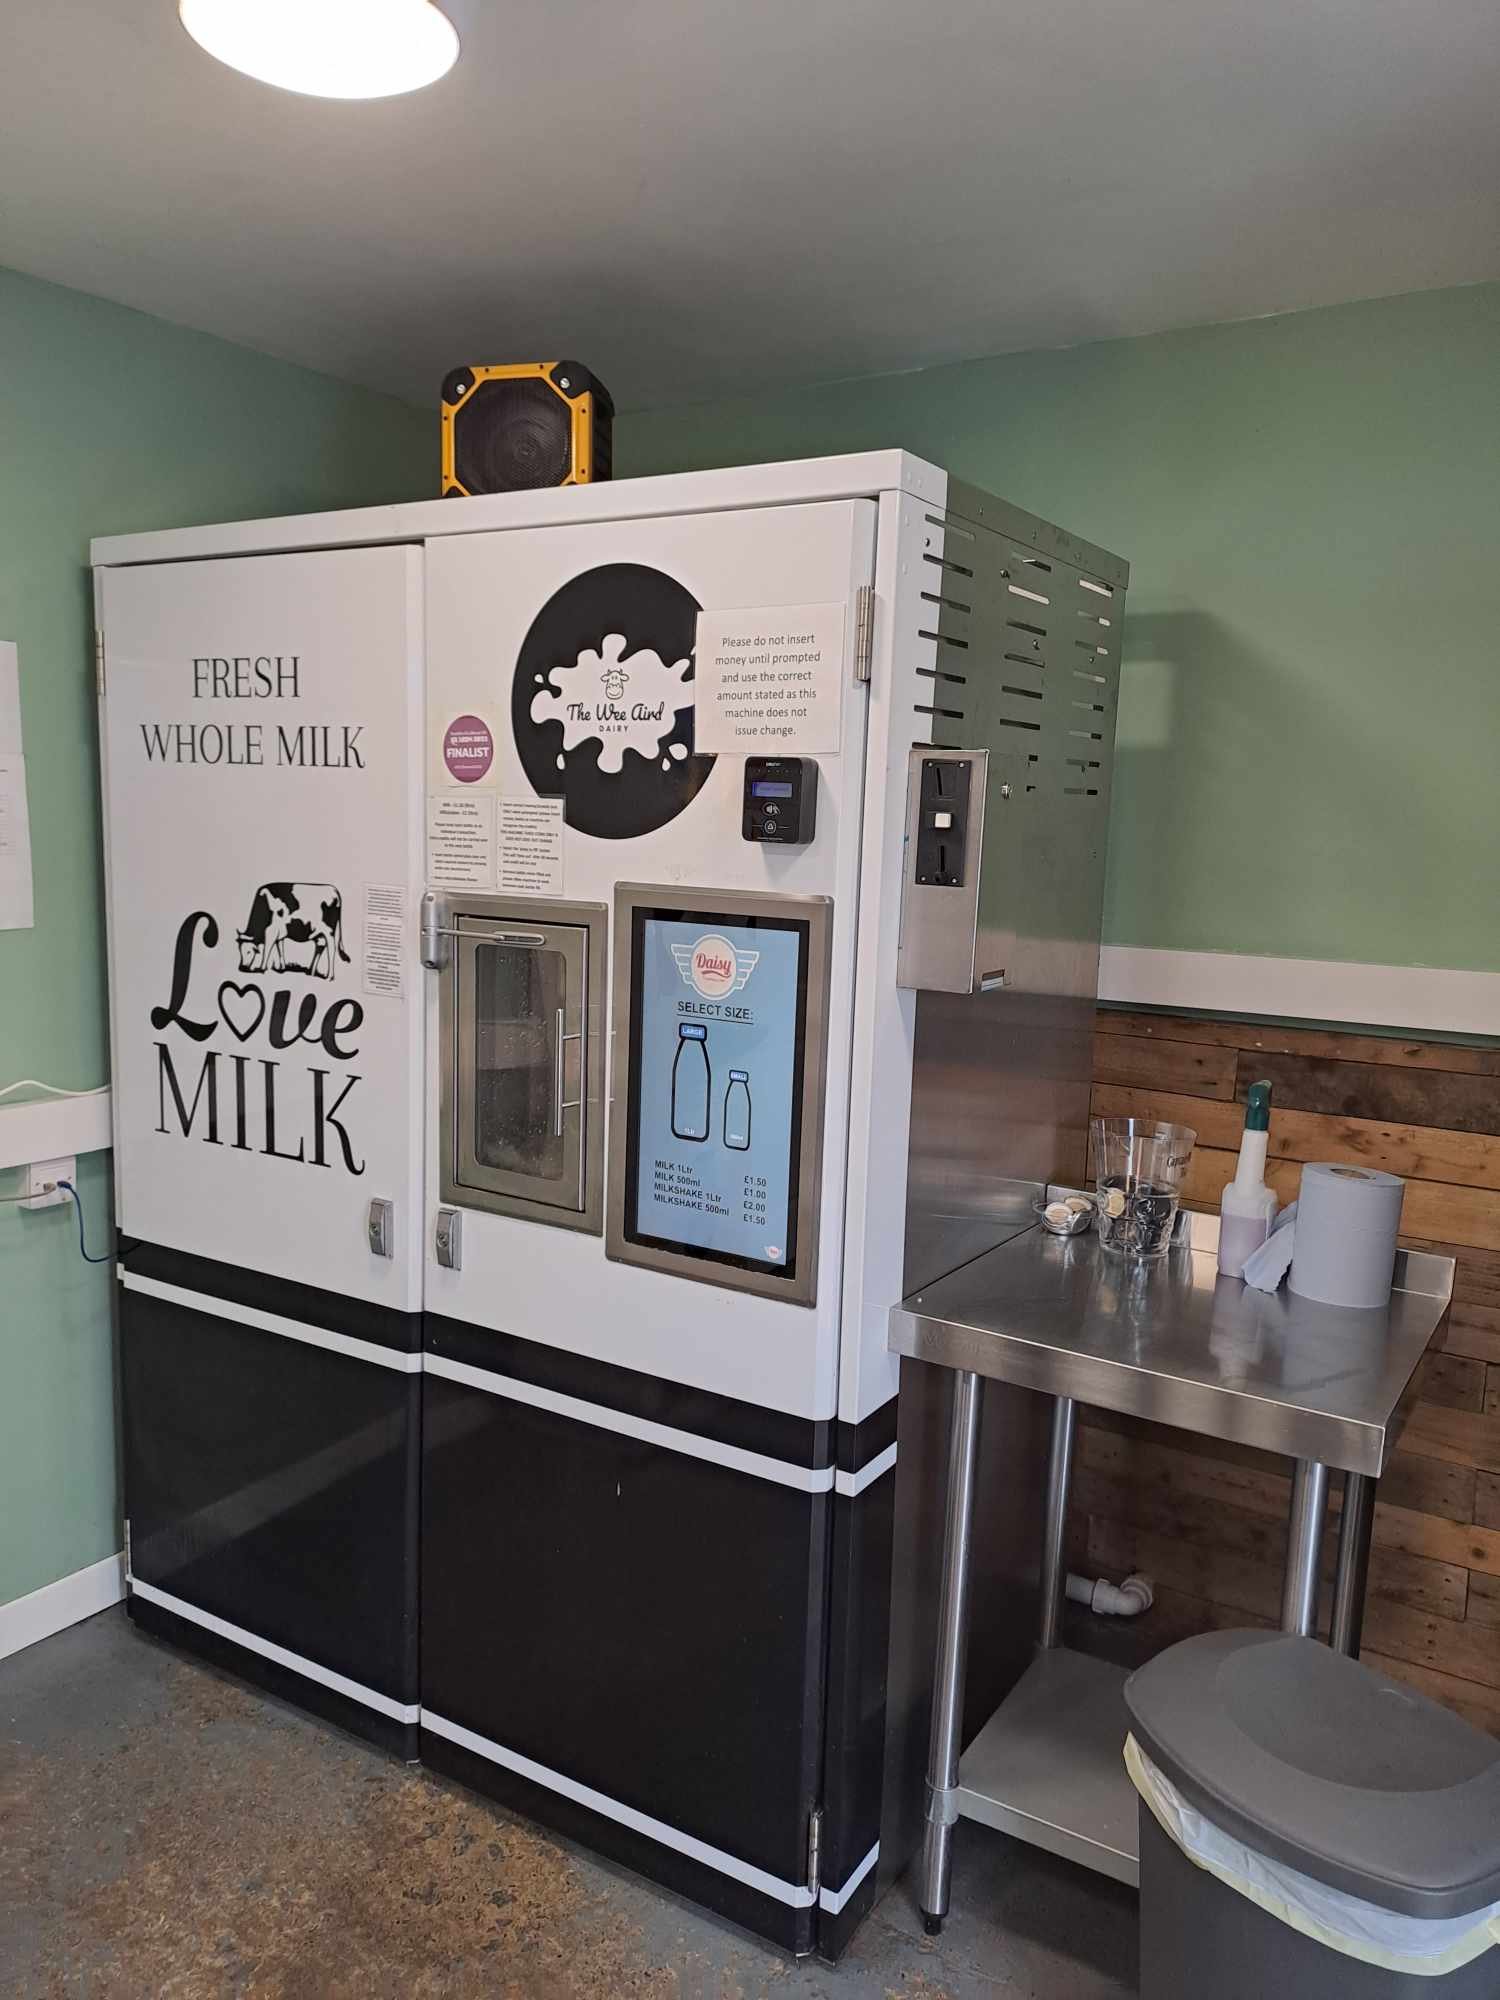 Cows Milk Refill Machine